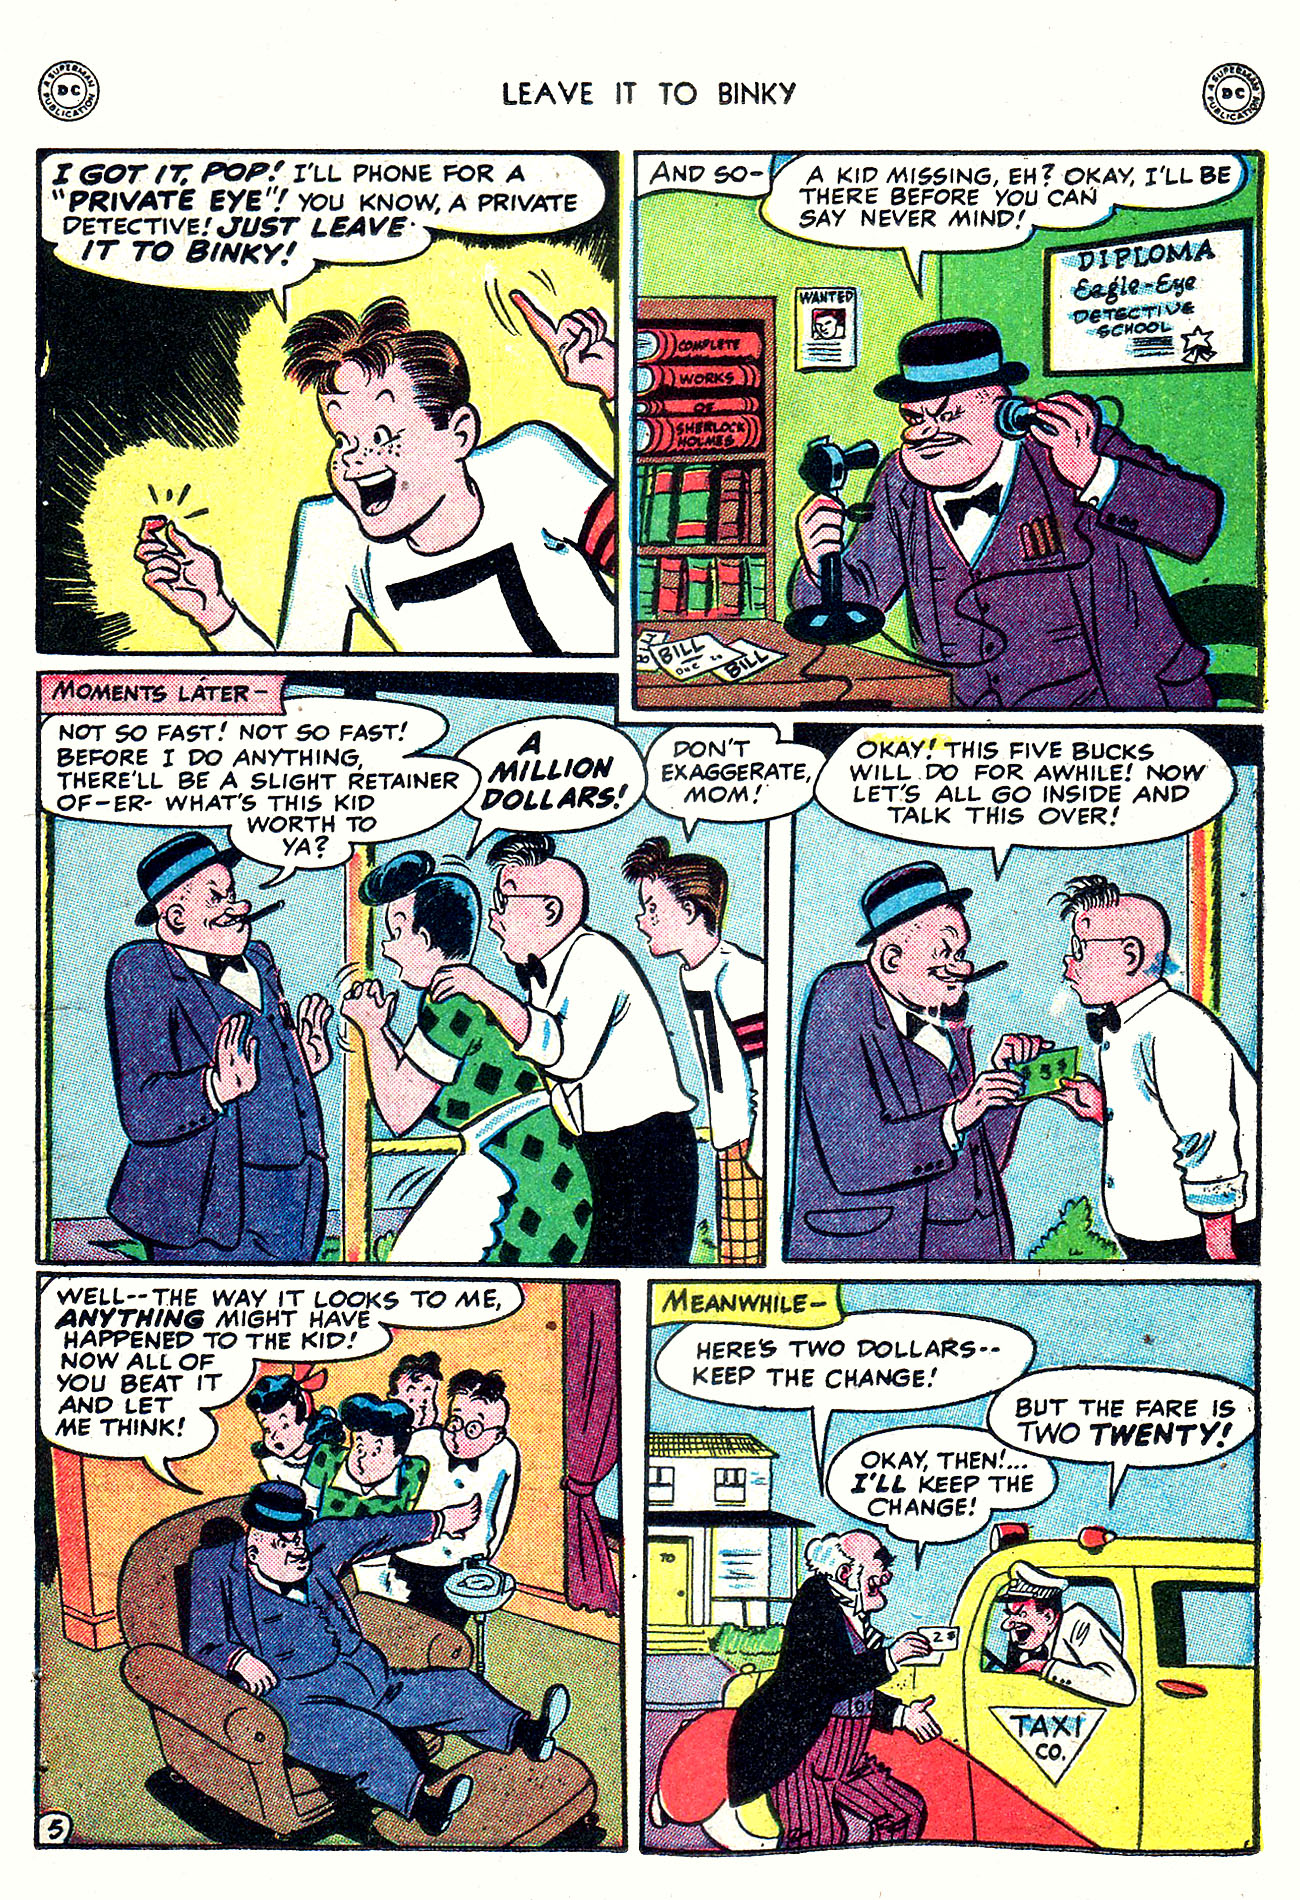 Read online Leave it to Binky comic -  Issue #6 - 23